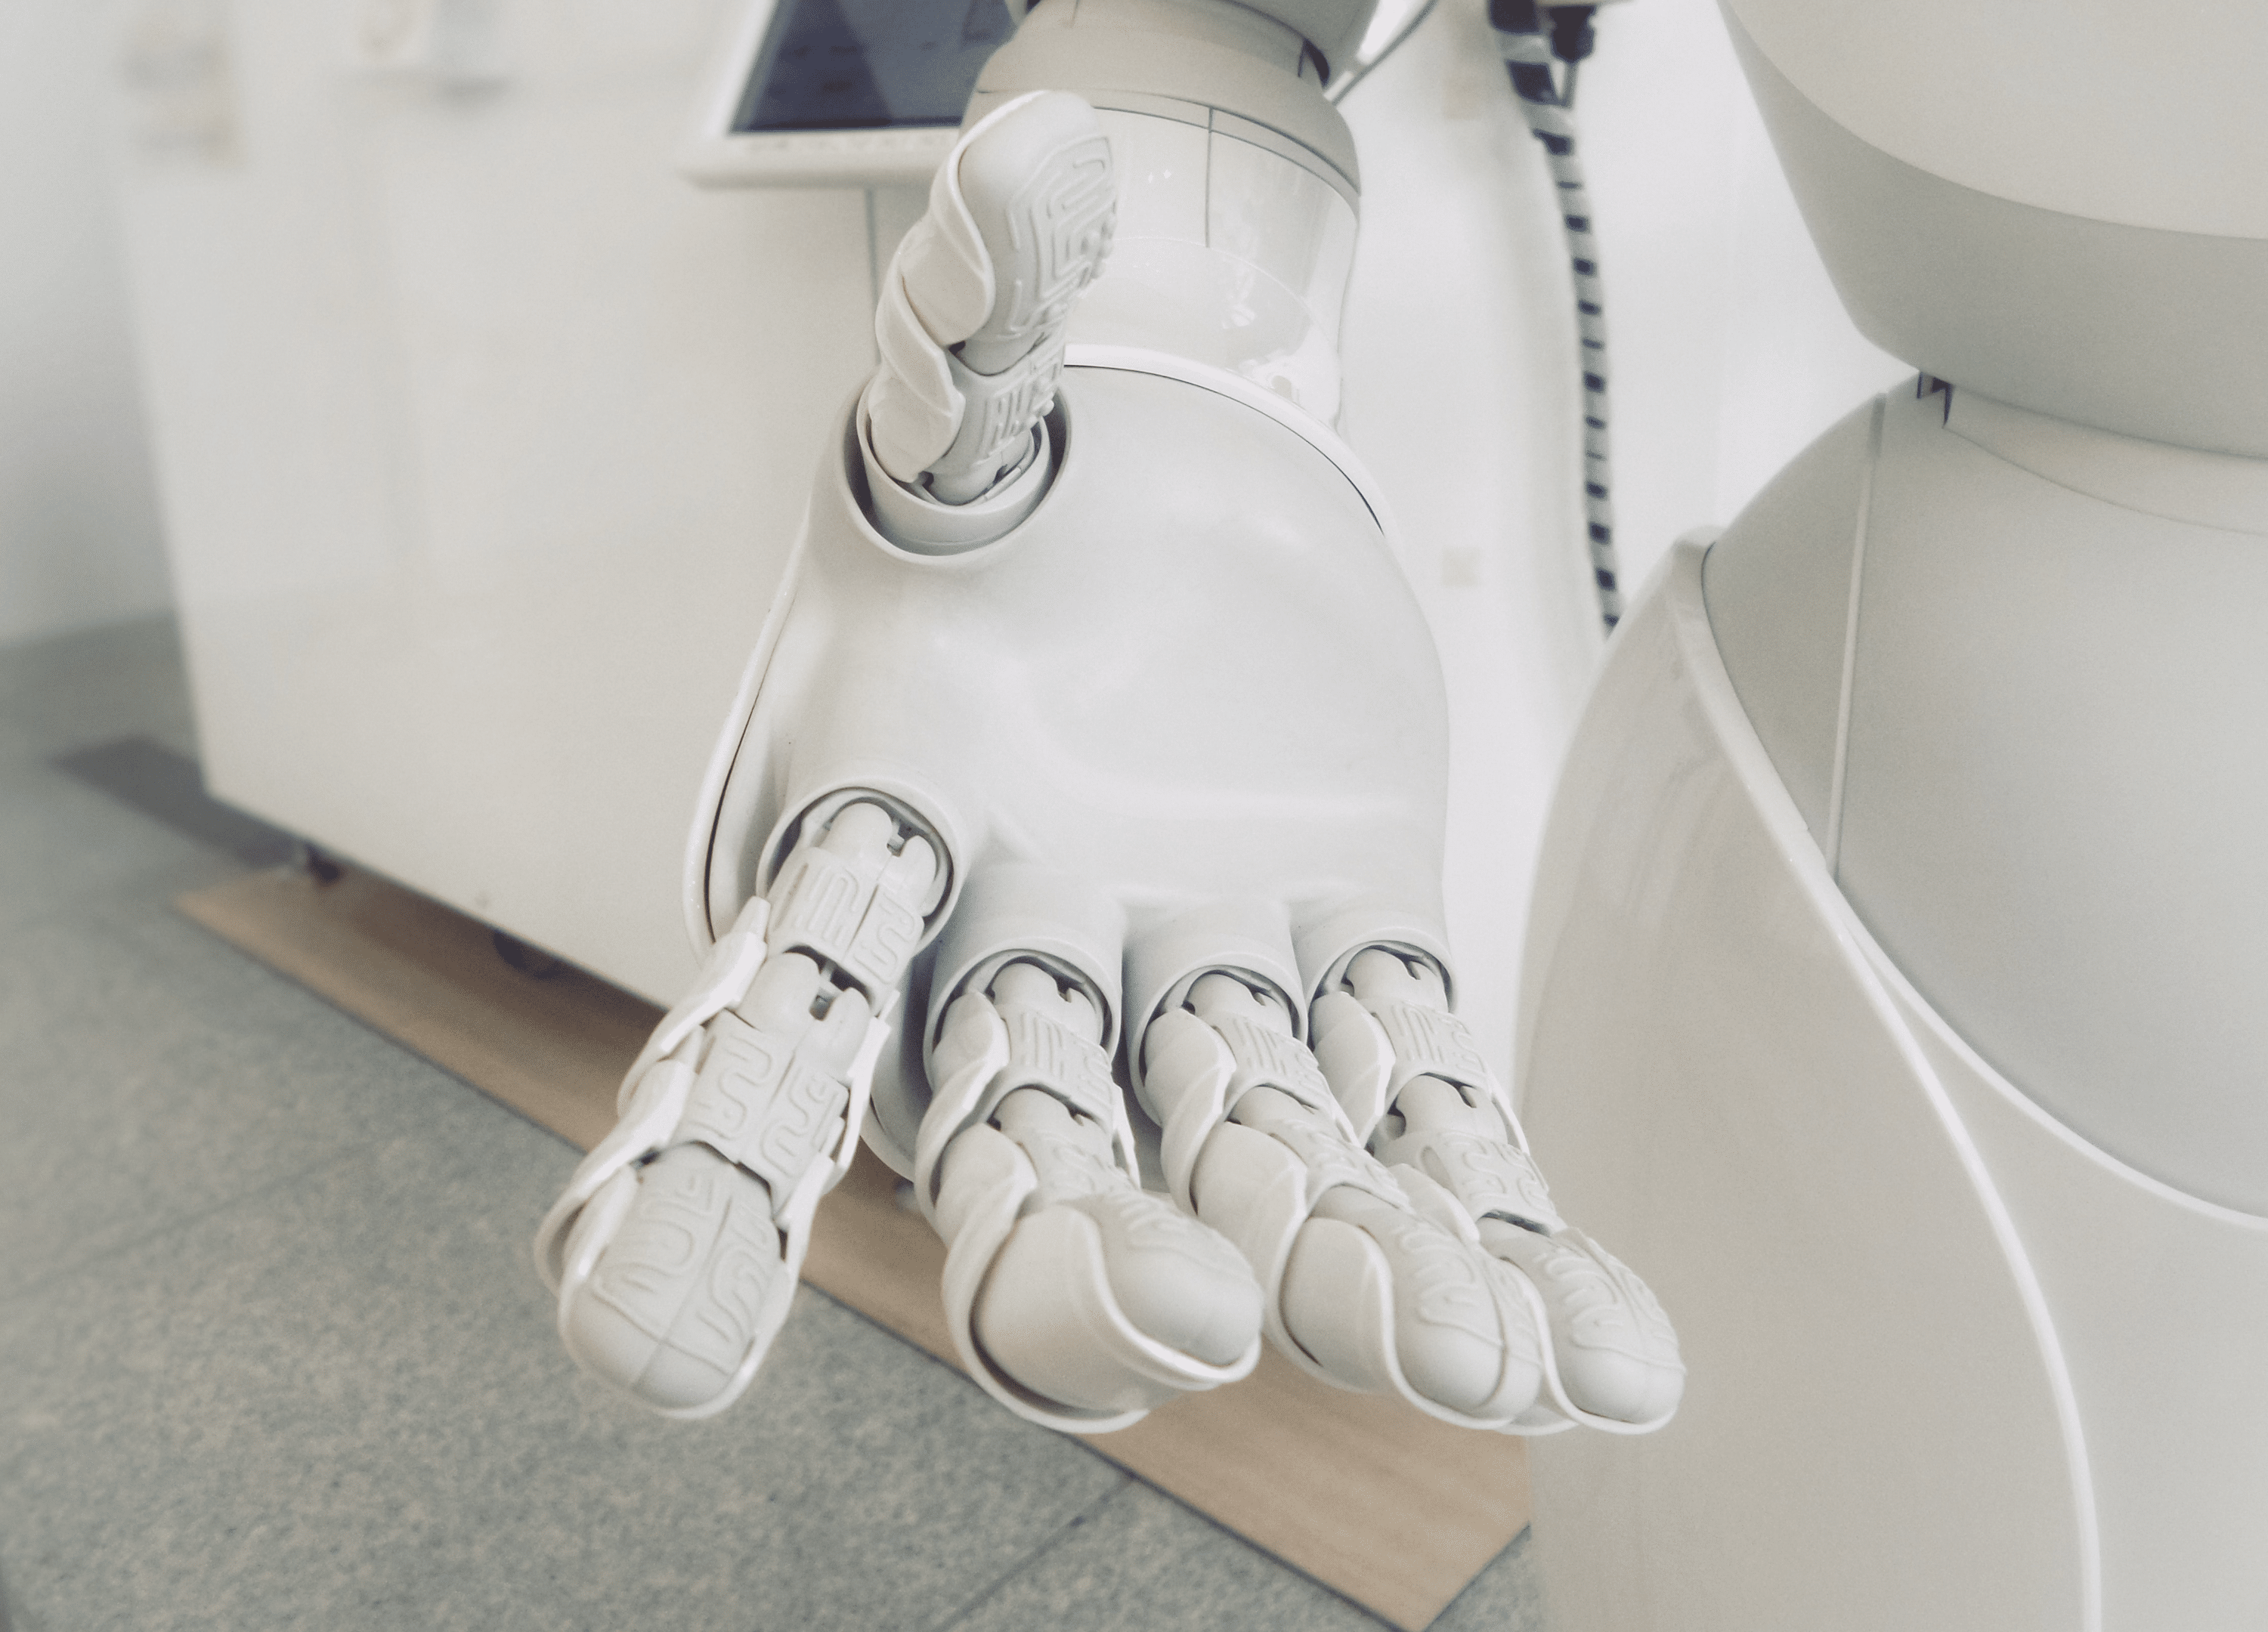 Tangan robot